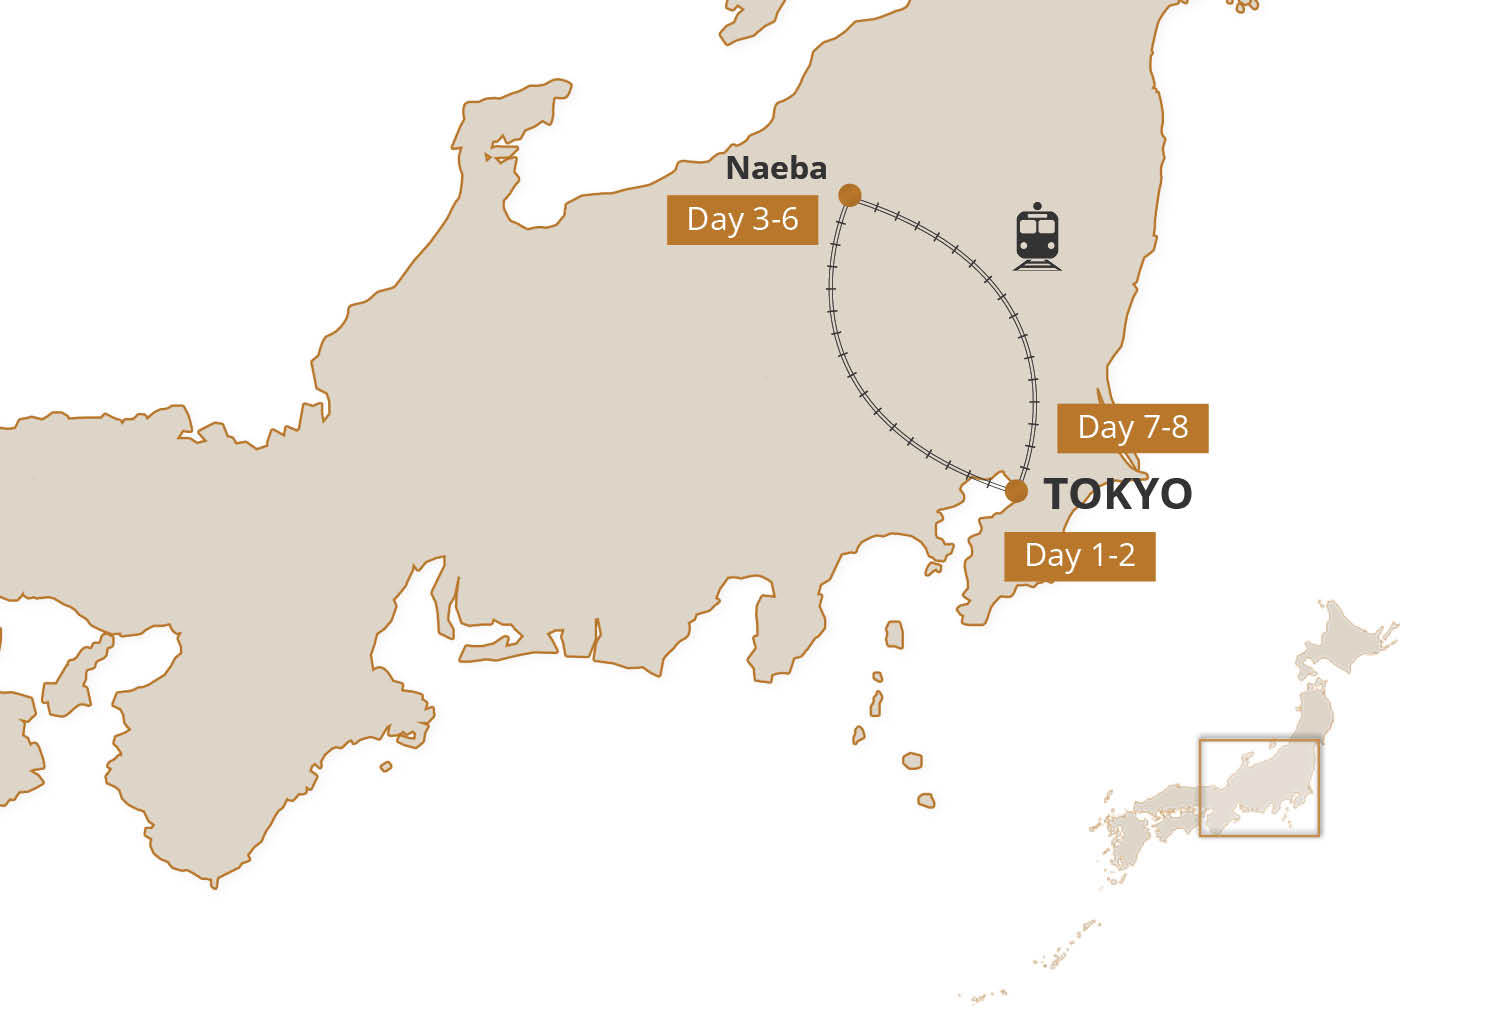 Map for Fuji Rock Festival